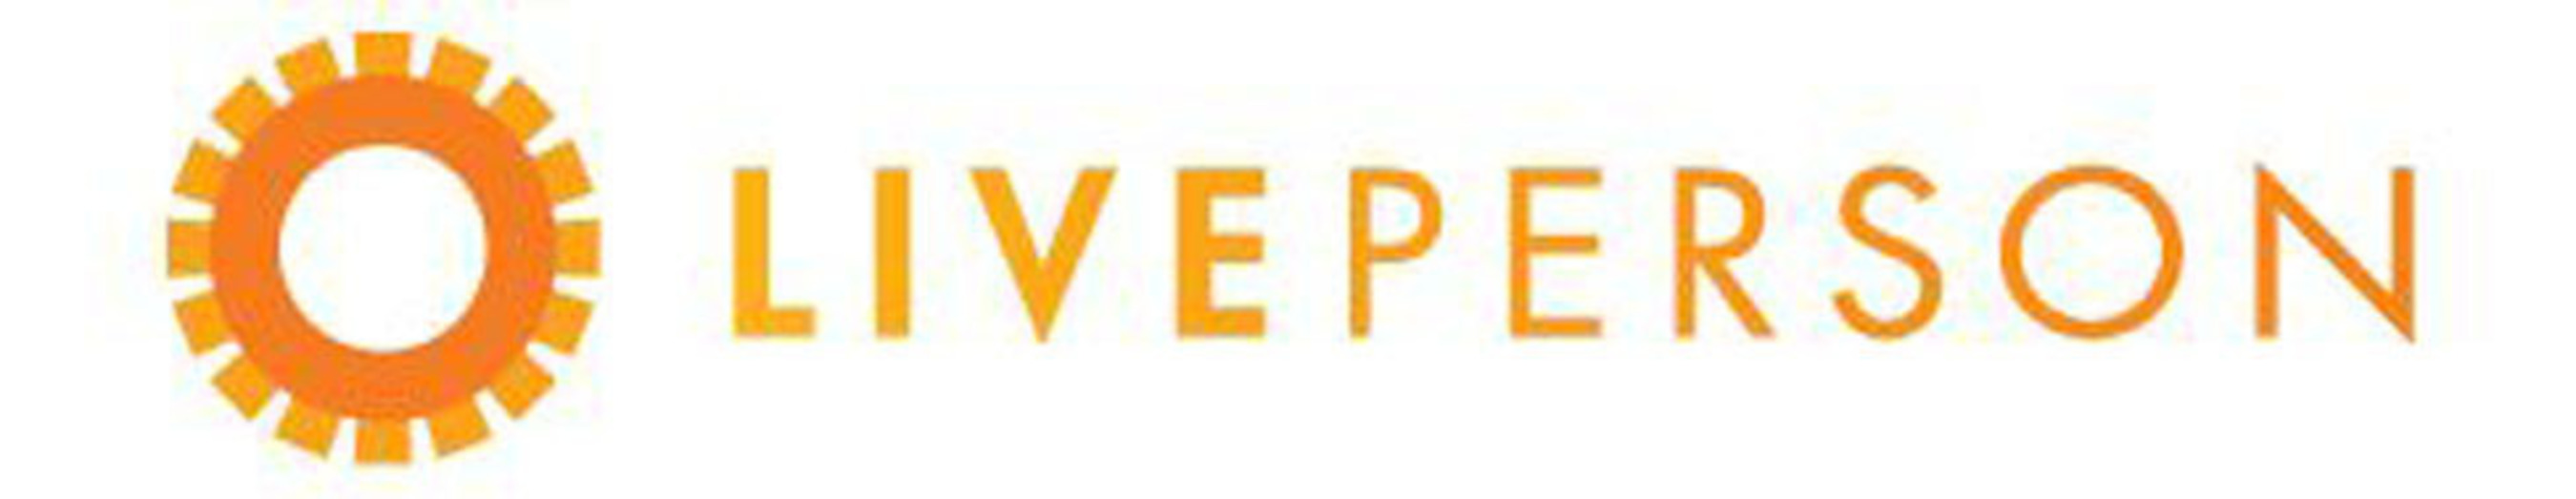 LivePerson Logo (PRNewsFoto/LivePerson, Inc.)